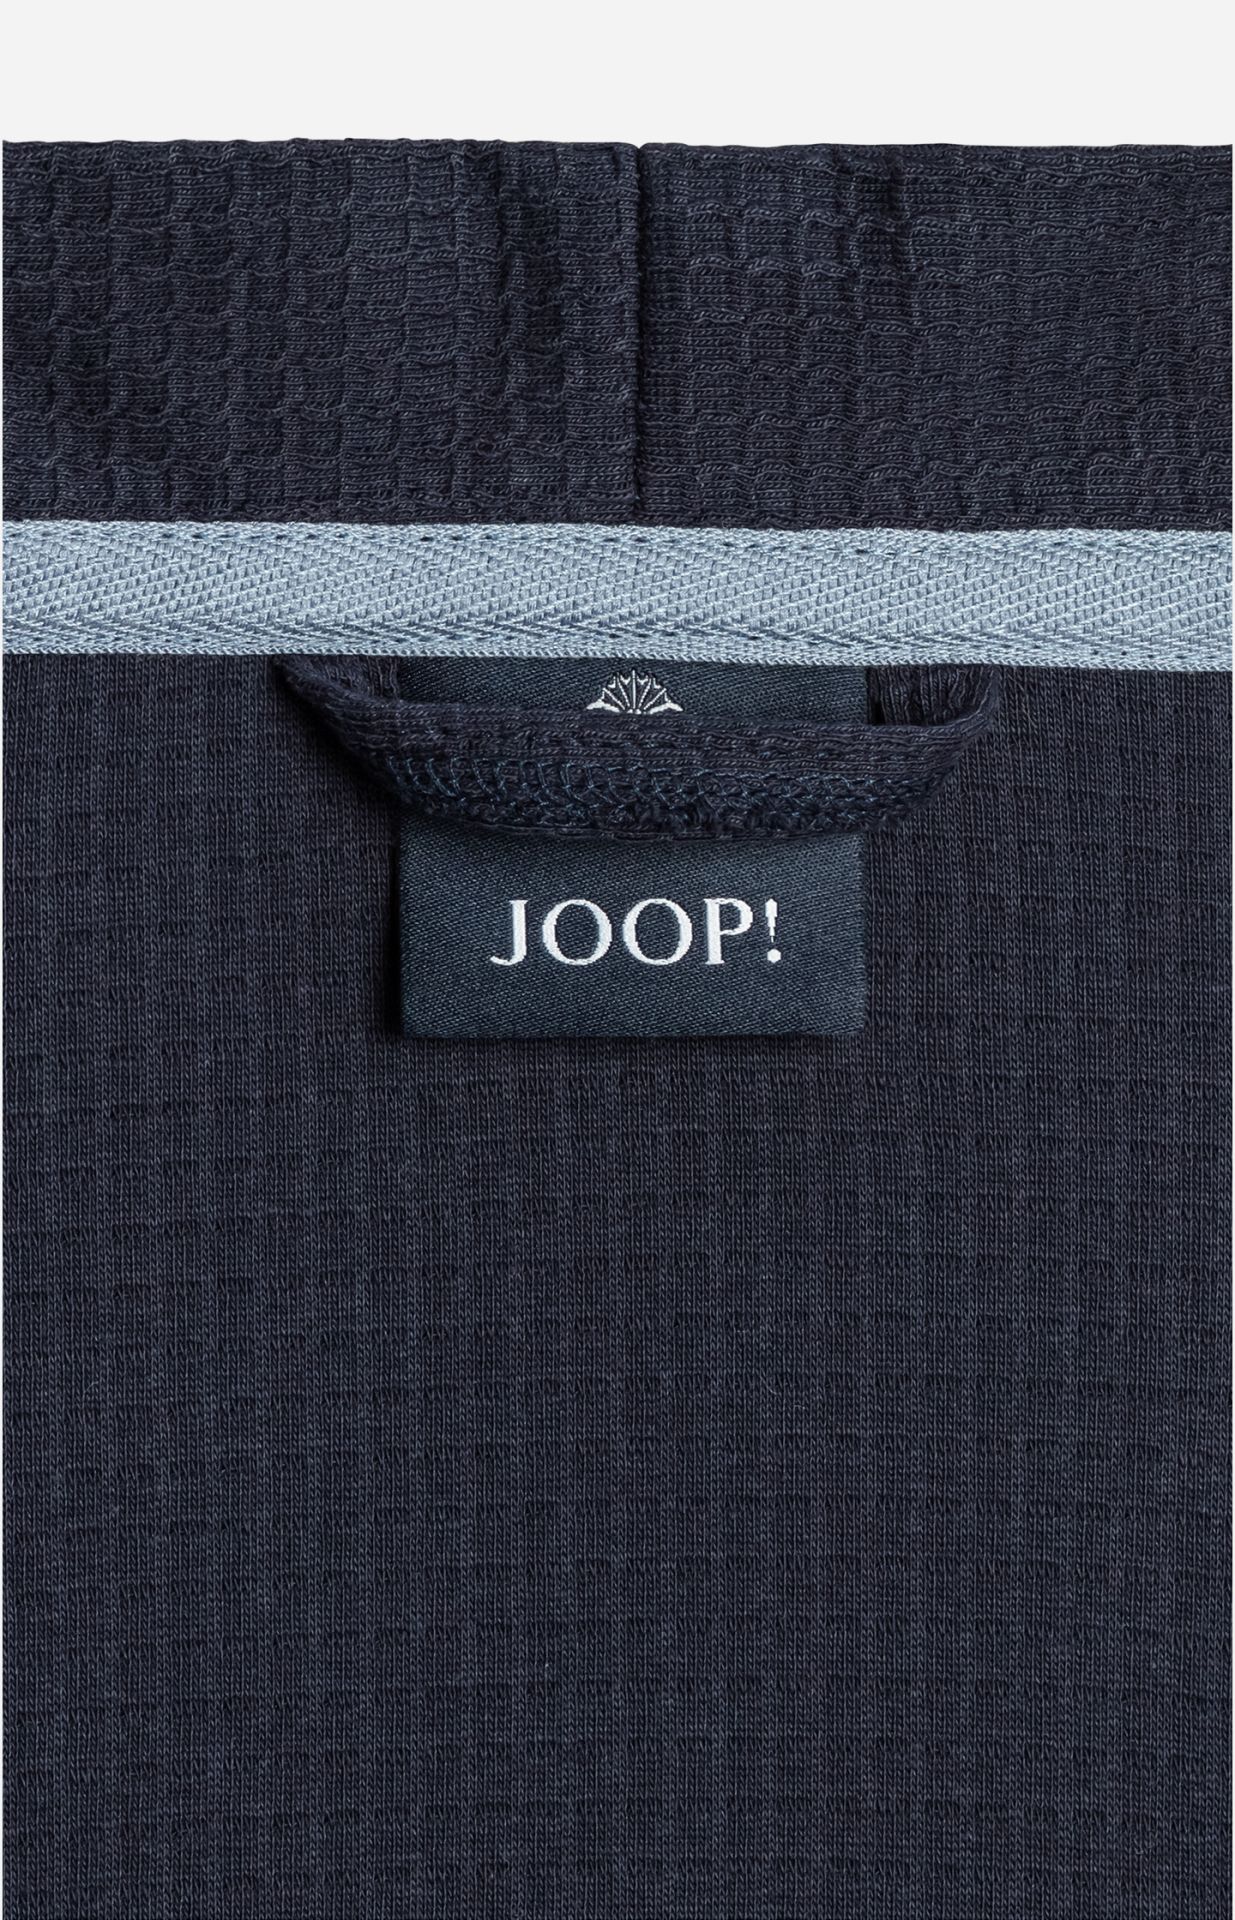 JOOP! Bademantel Uni Pique Herren-Kimono Gr.52 blau